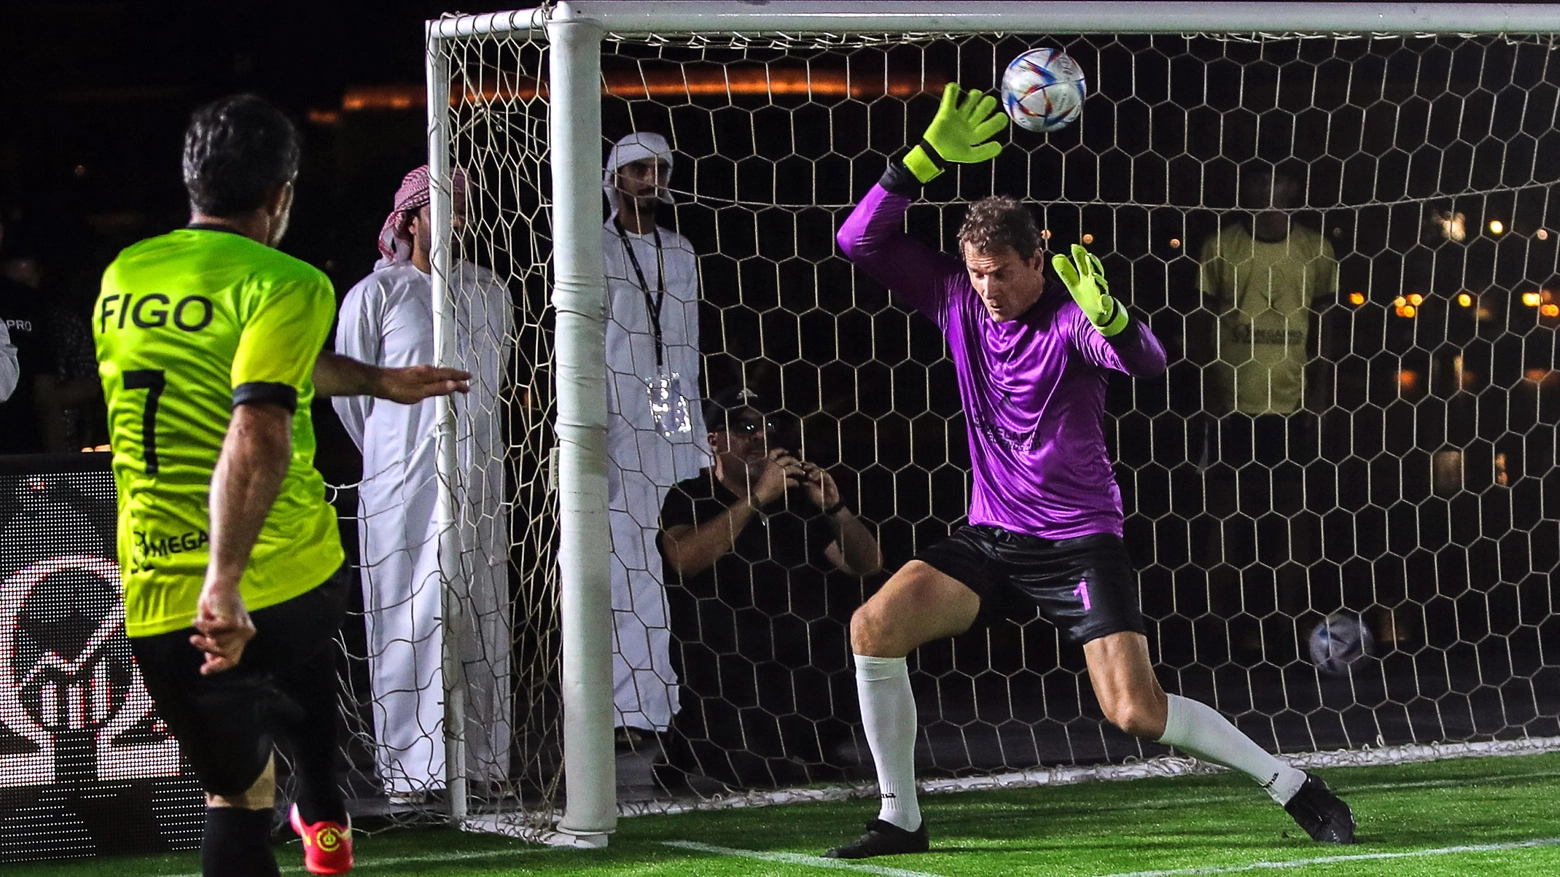 Jens Lehmann in porta durante un match esibizione negli Emirati Arabi (Ansa)